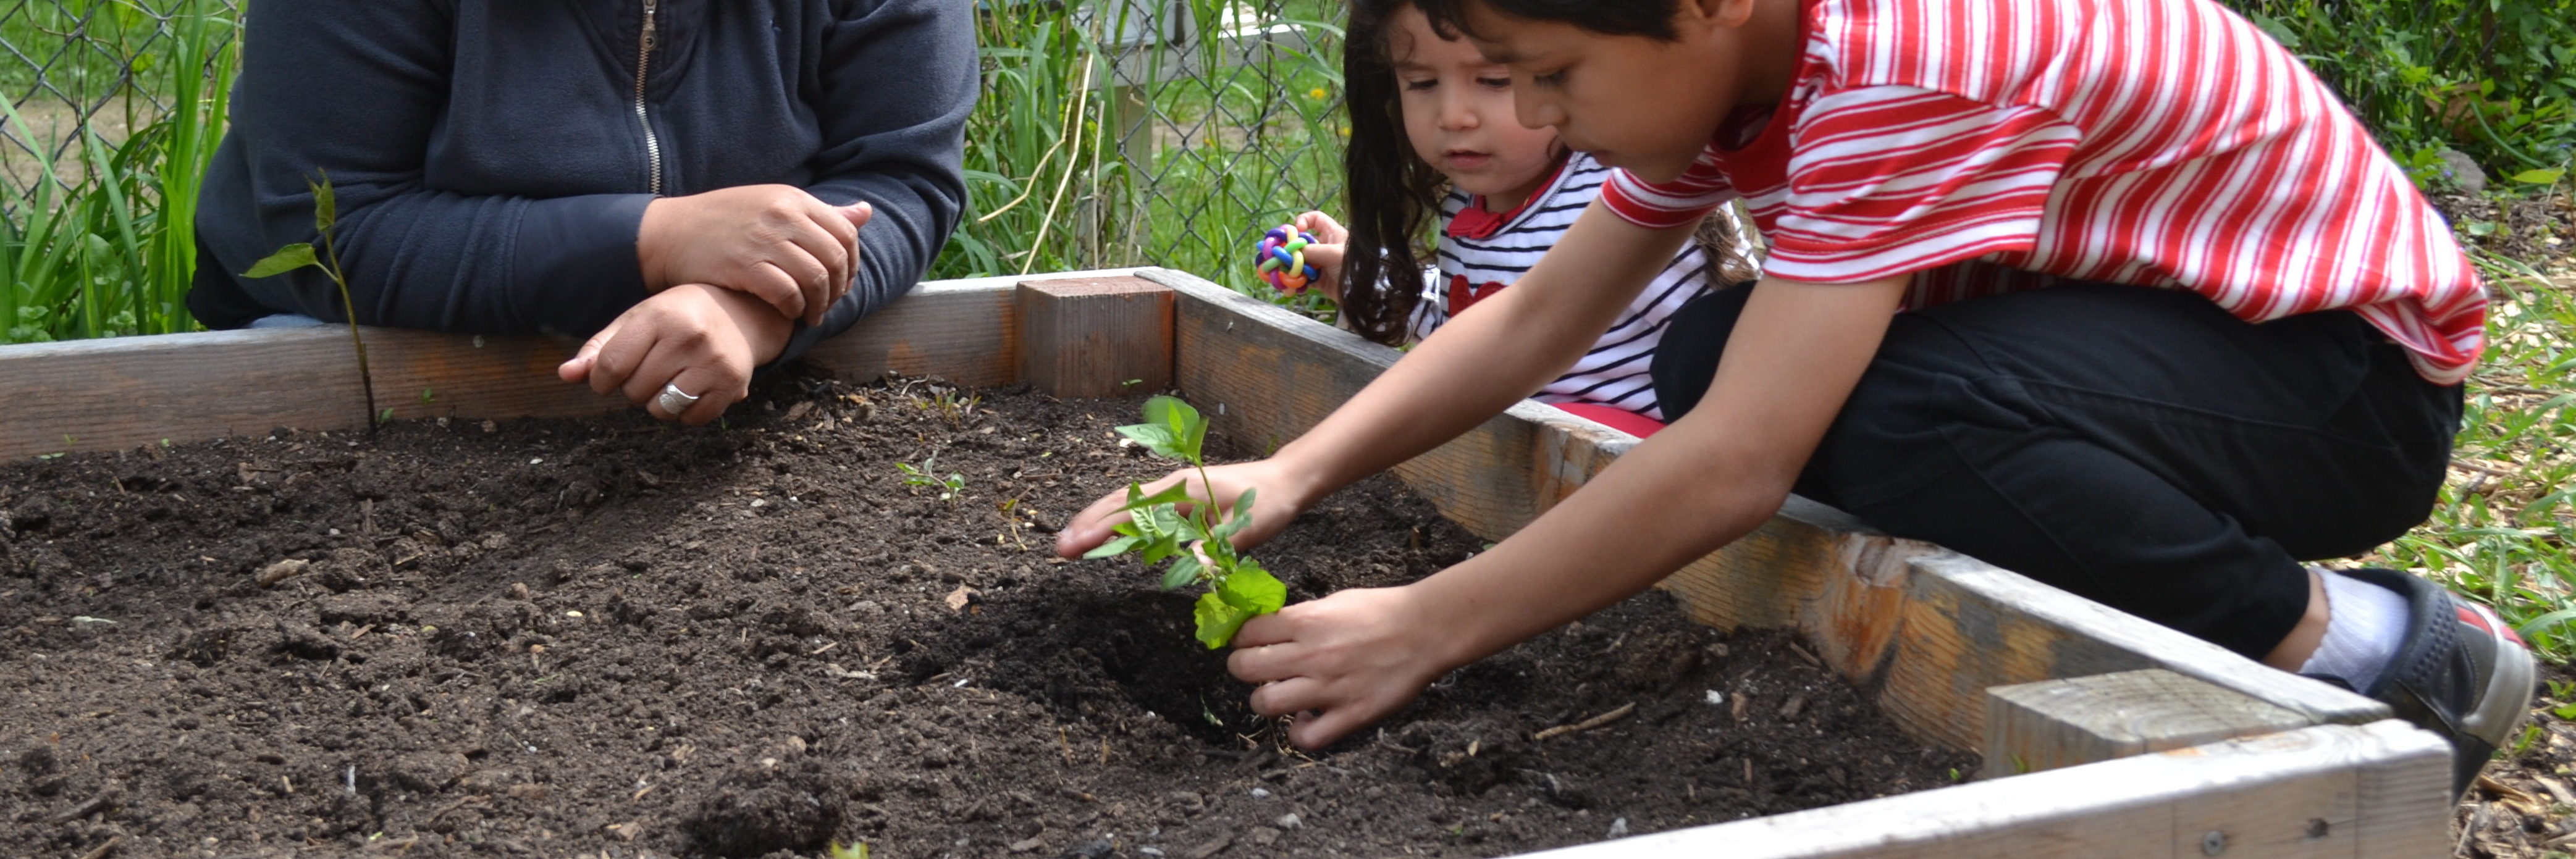 Kids planting veggies